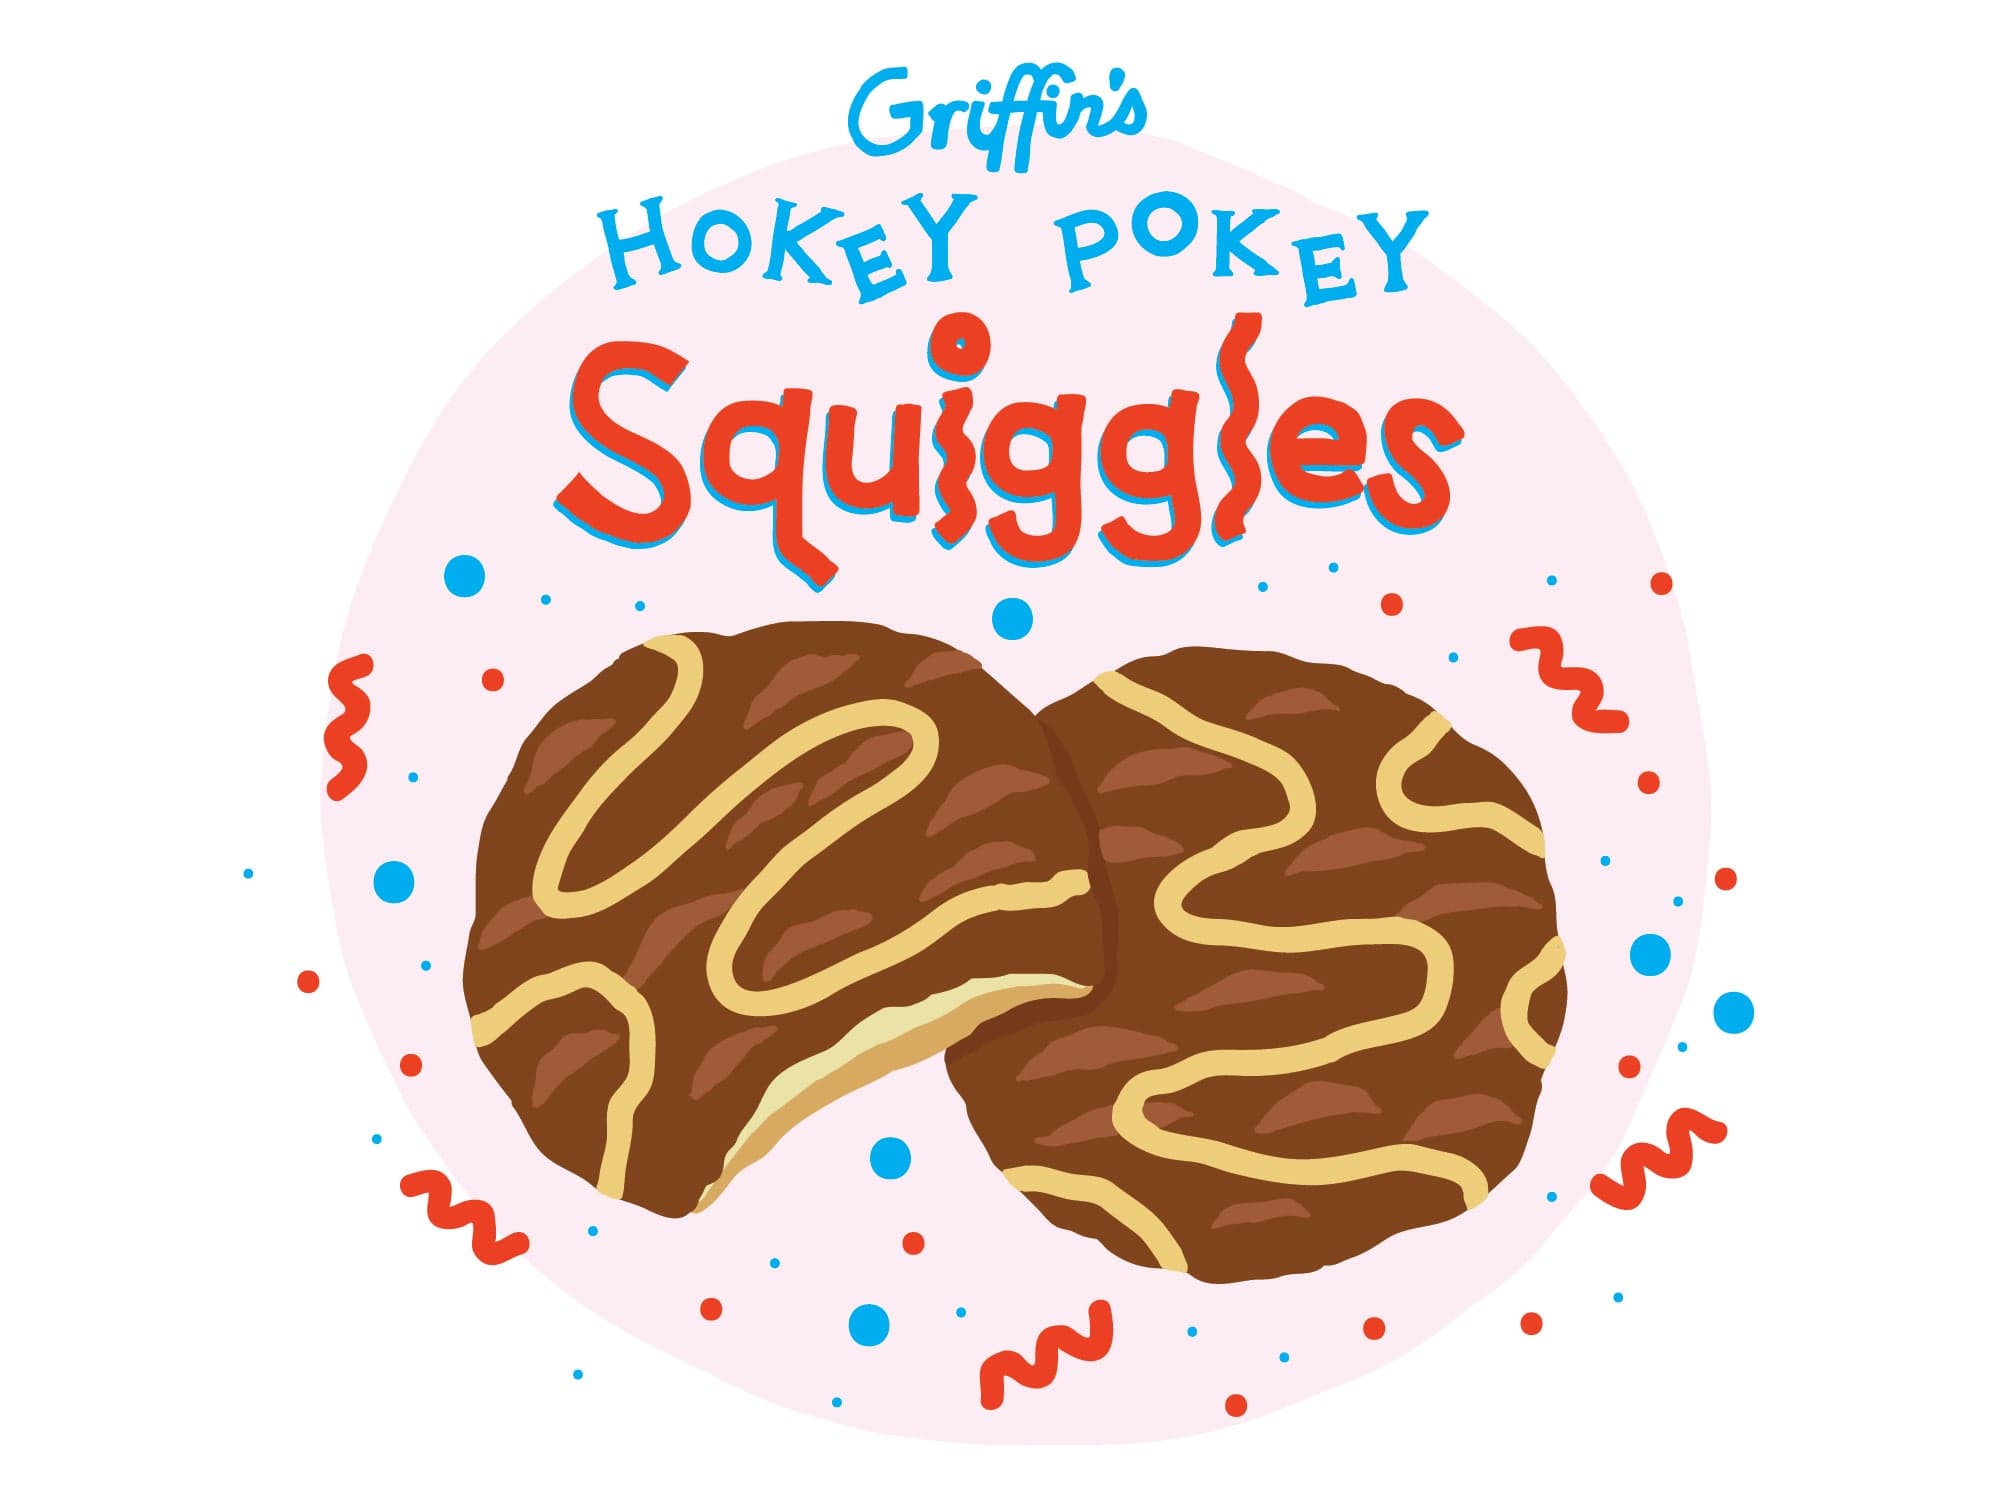 Griffin’s Hokey Pokey Squiggles